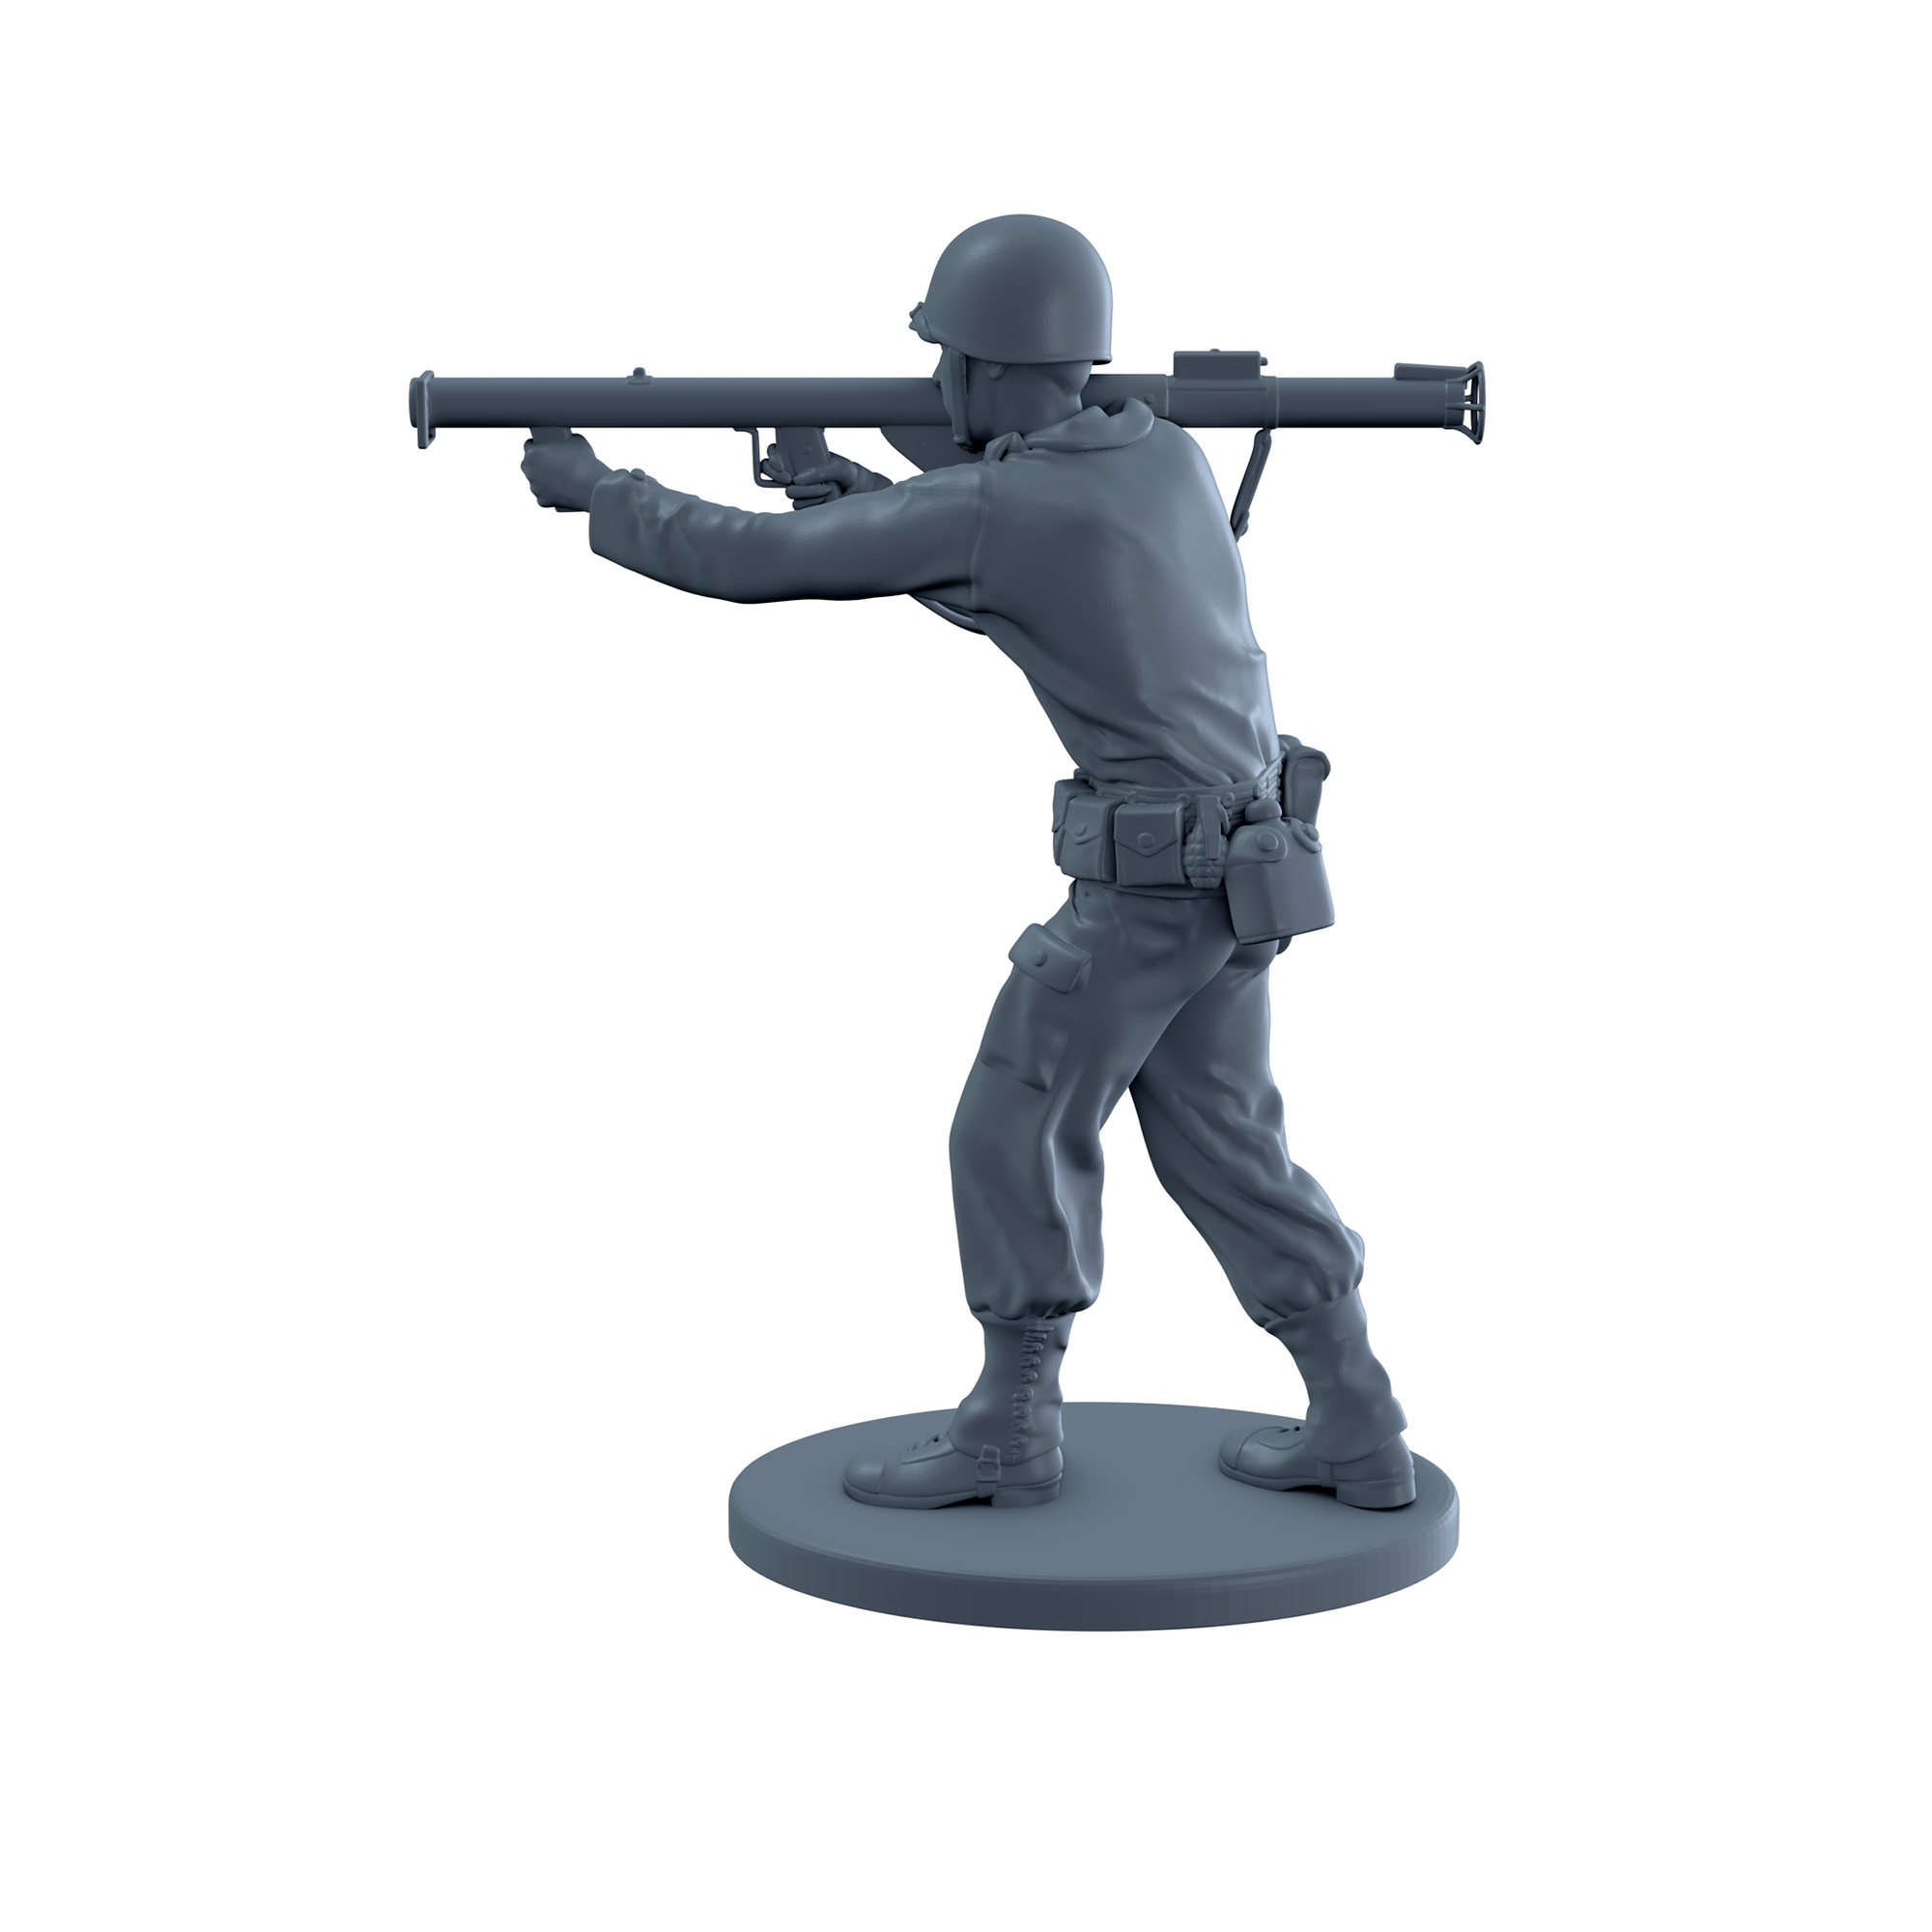 American Soldier Standing Shooting Bazooka